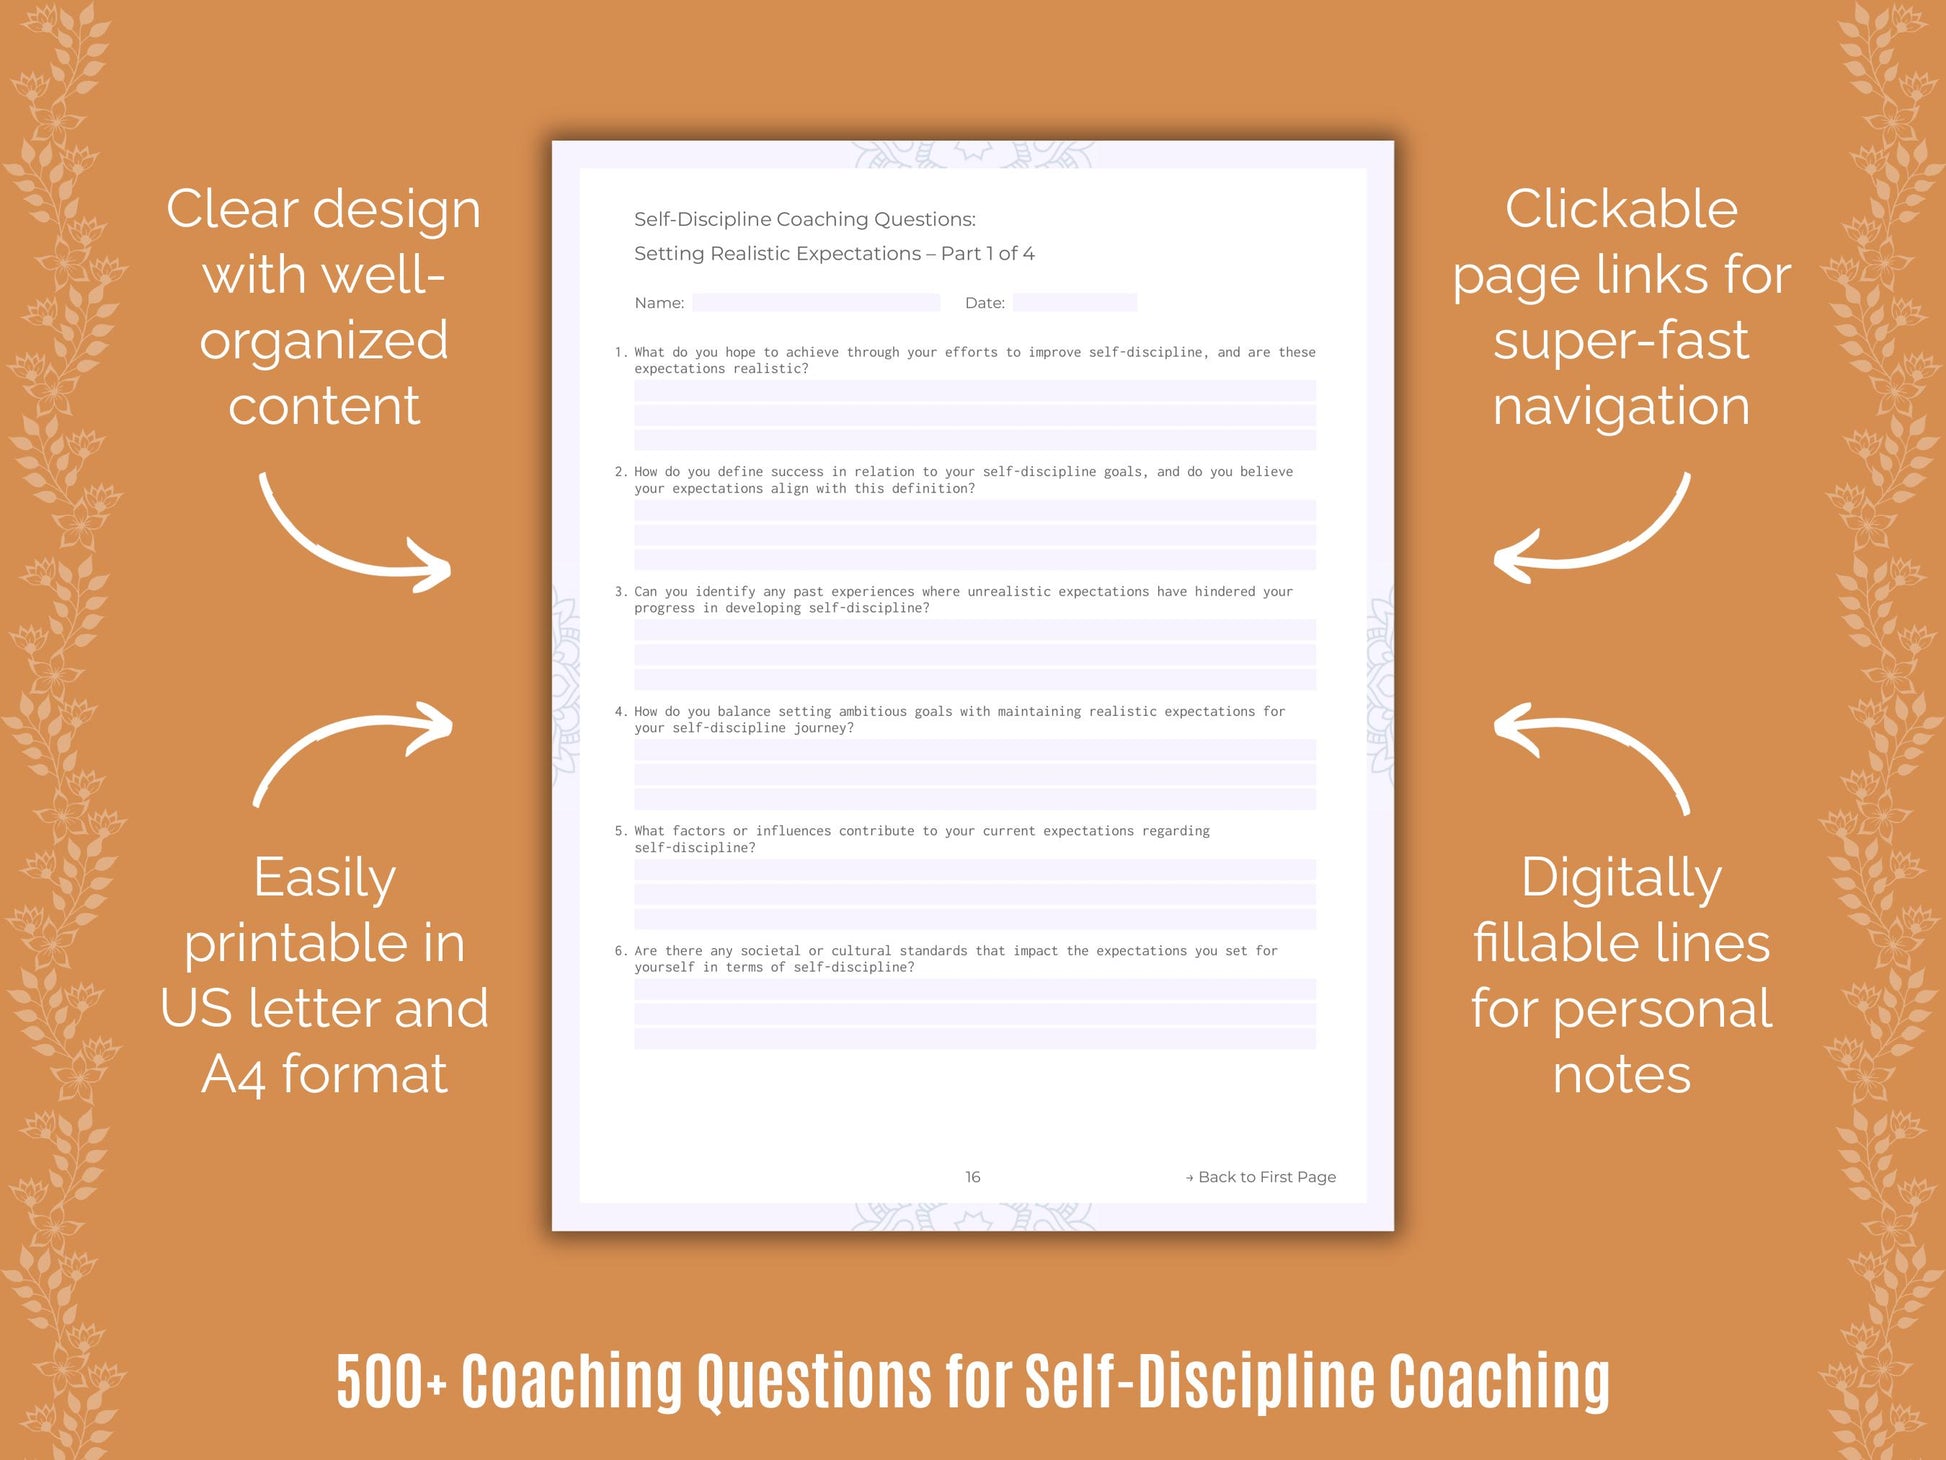 Self-Discipline Coaching Questions Resource